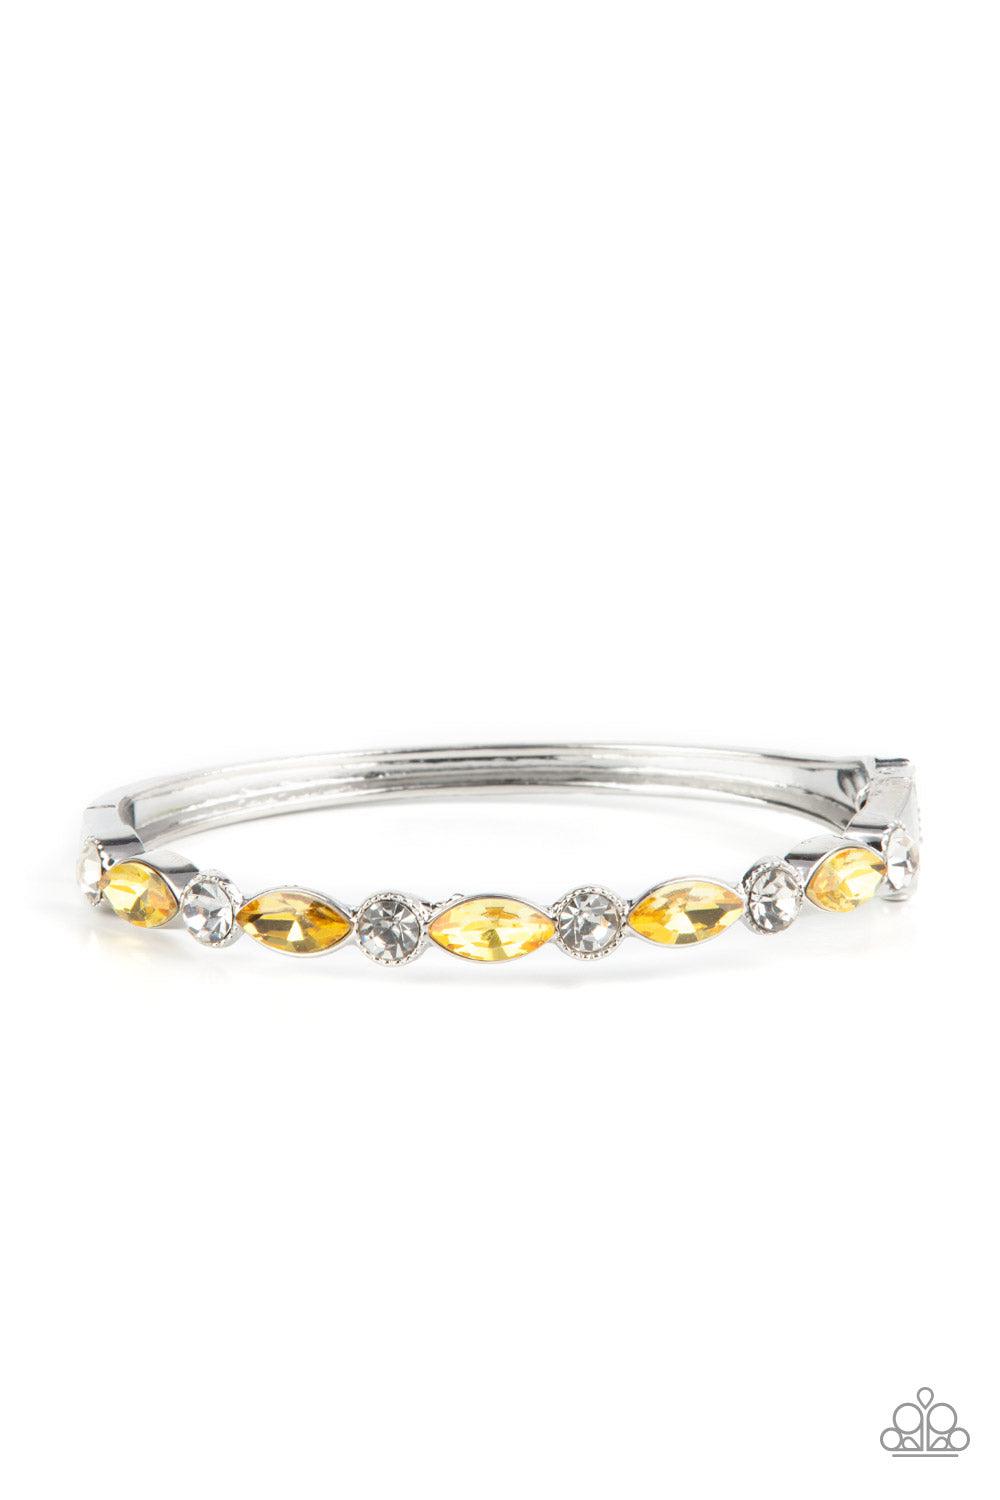 Petitely Powerhouse Yellow & White Rhinestone Bracelet - Paparazzi Accessories- lightbox - CarasShop.com - $5 Jewelry by Cara Jewels